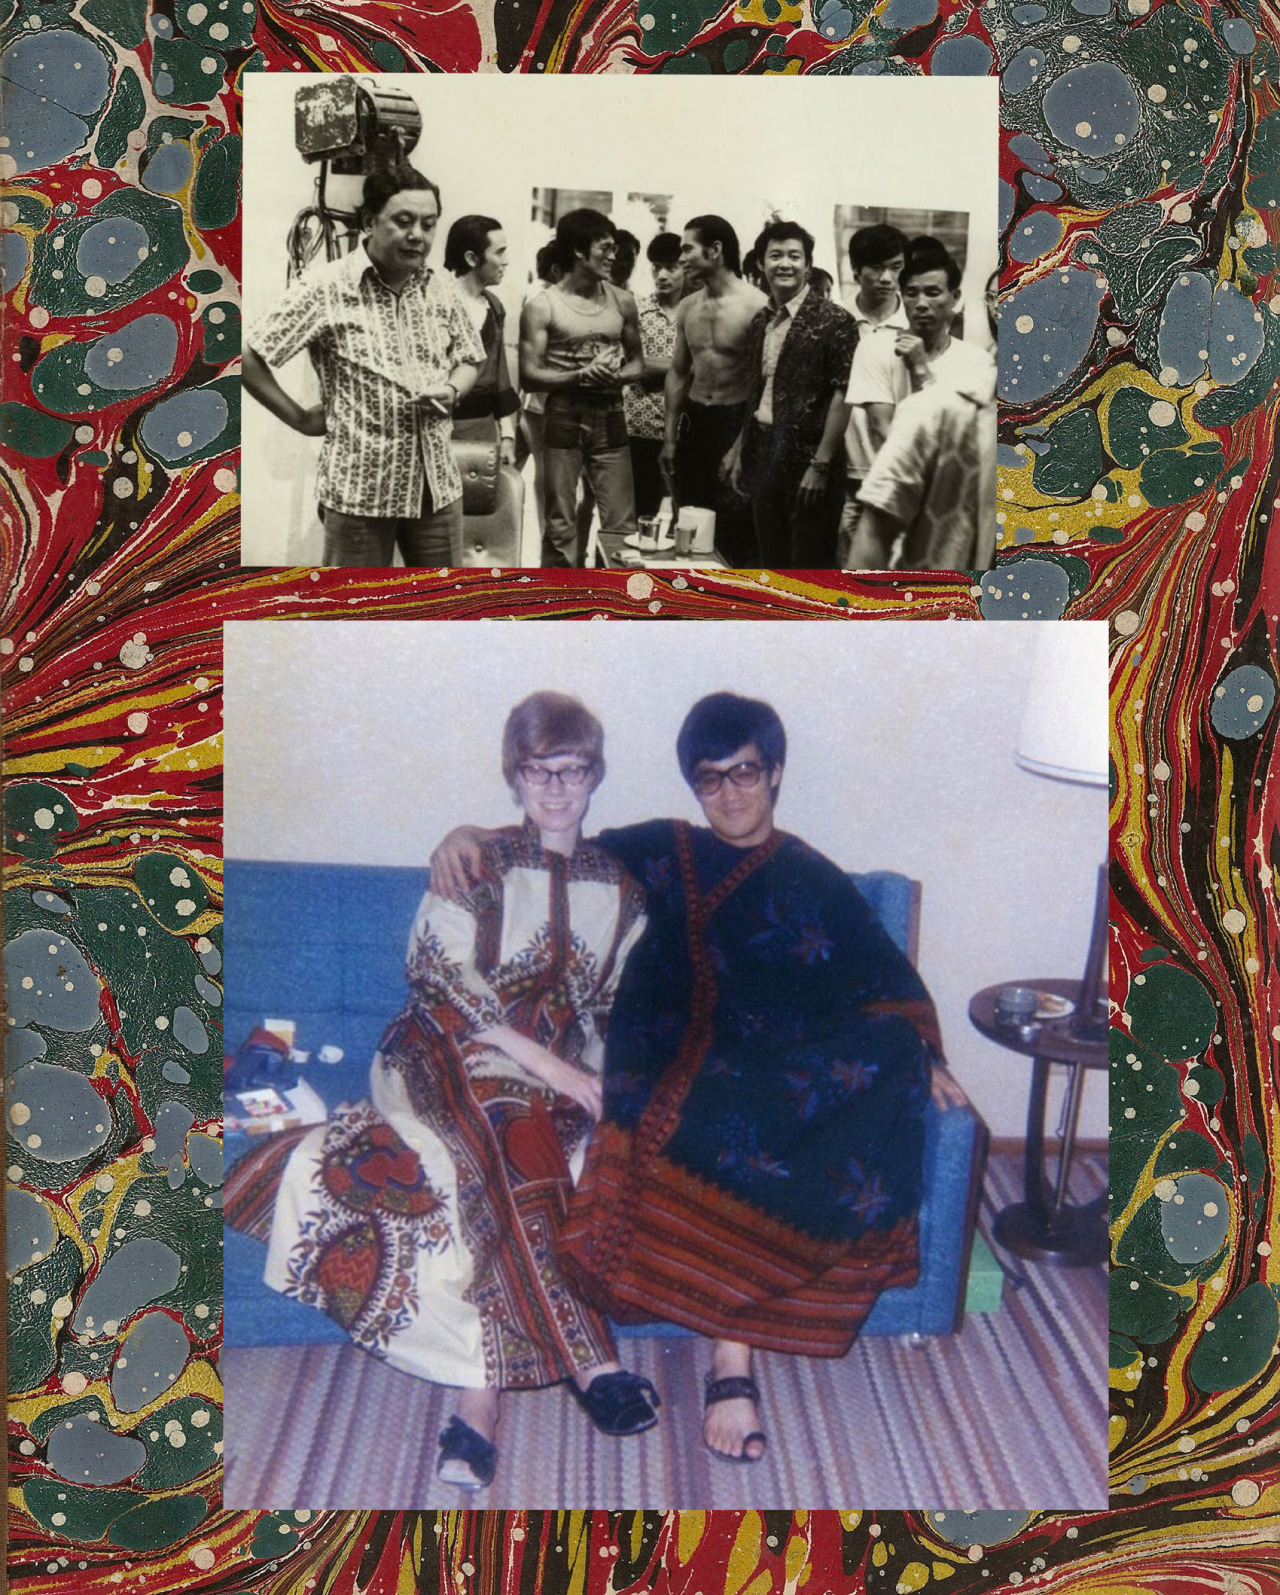 Bruce Lee Scrapbook - FACTORY Fanzine XXXVII #bruce lee#linda lee#sandals#maroccan#kaftans#Polaroid#factory fanzine #bruce lee scrapbook #hong kong#vintage#70s#legend#martial arts#muscle #bruce lee fashion #baldovino barani#fanzine#kowloon#ephemera#scrapbook